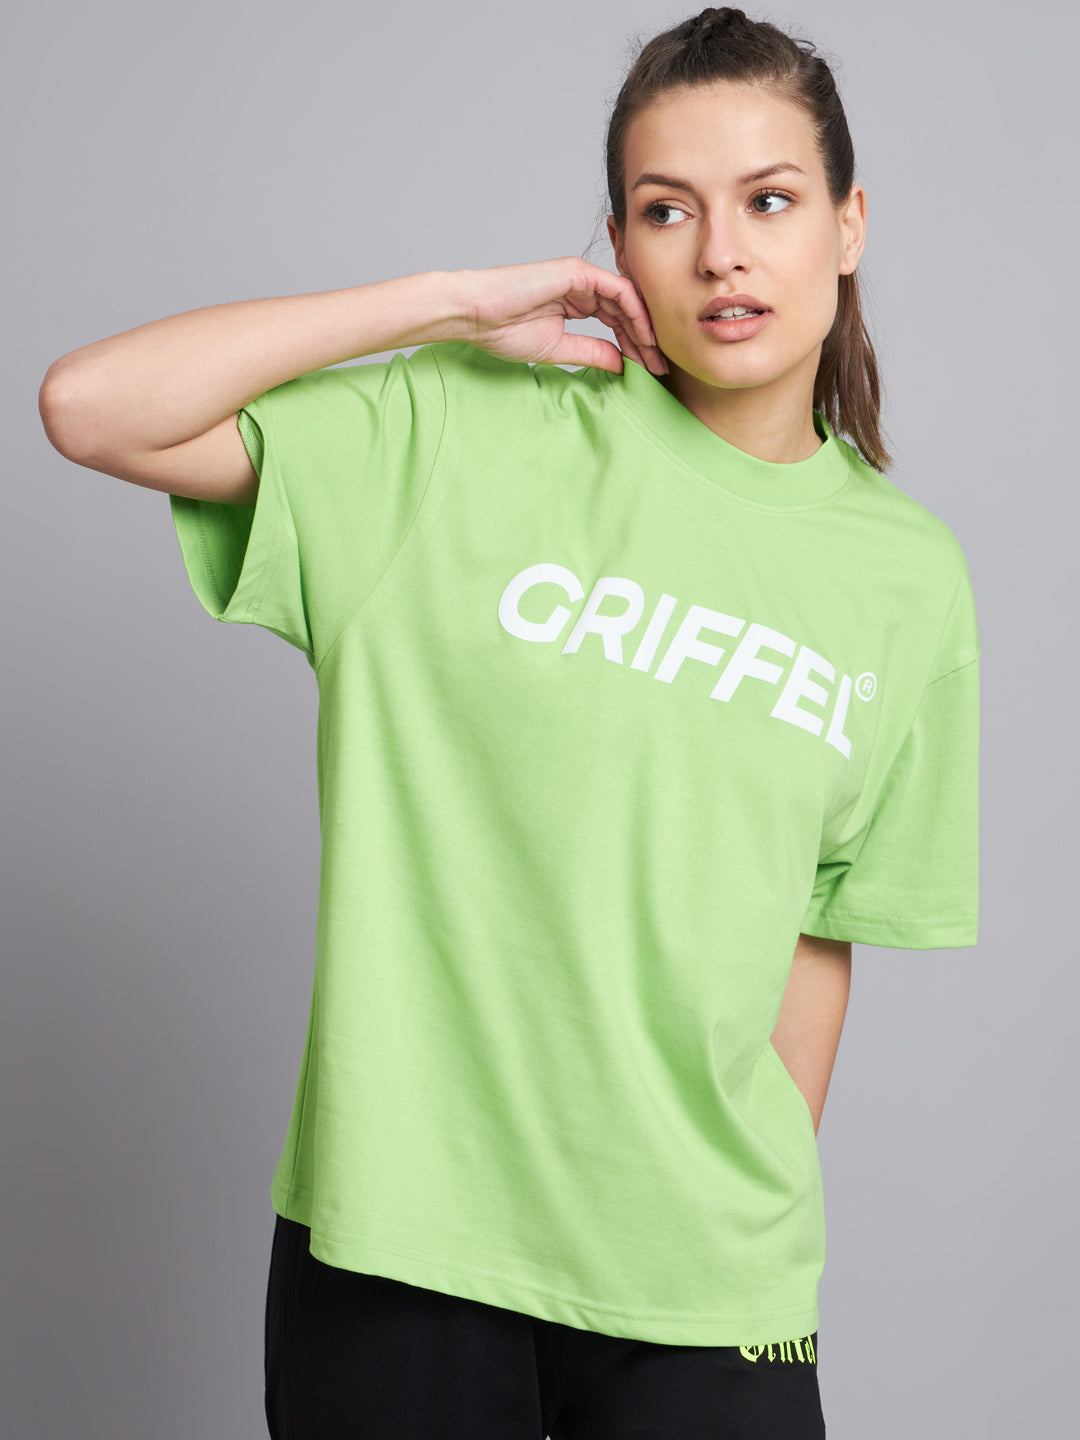 GRIFFEL Women SIGNATURE LOGO oversized Drop Shoulder Neon green T-shirt - griffel